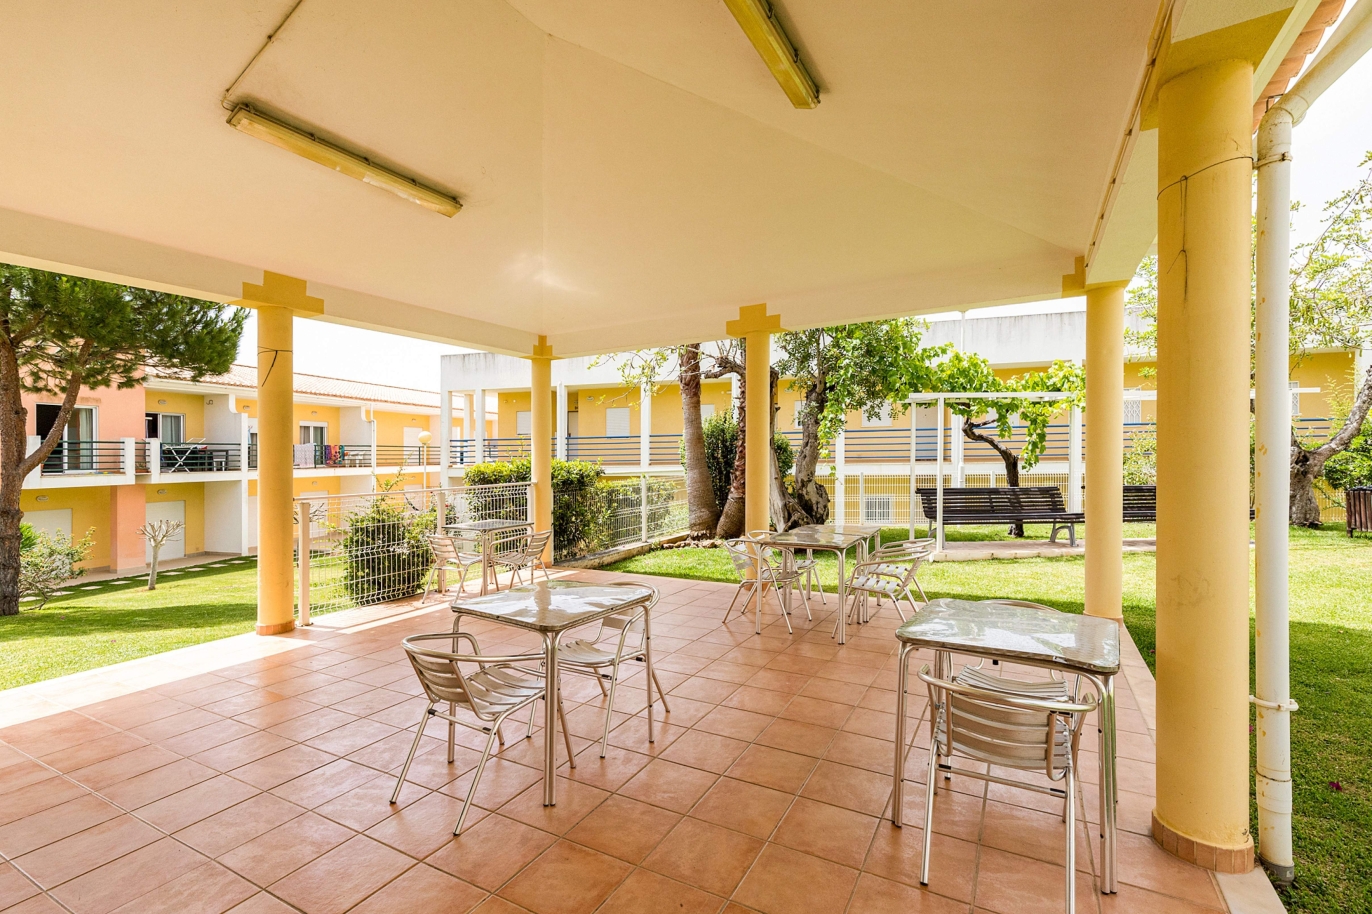 Apartamento T2, em condominio, para venda, Albufeira, Algarve_201460